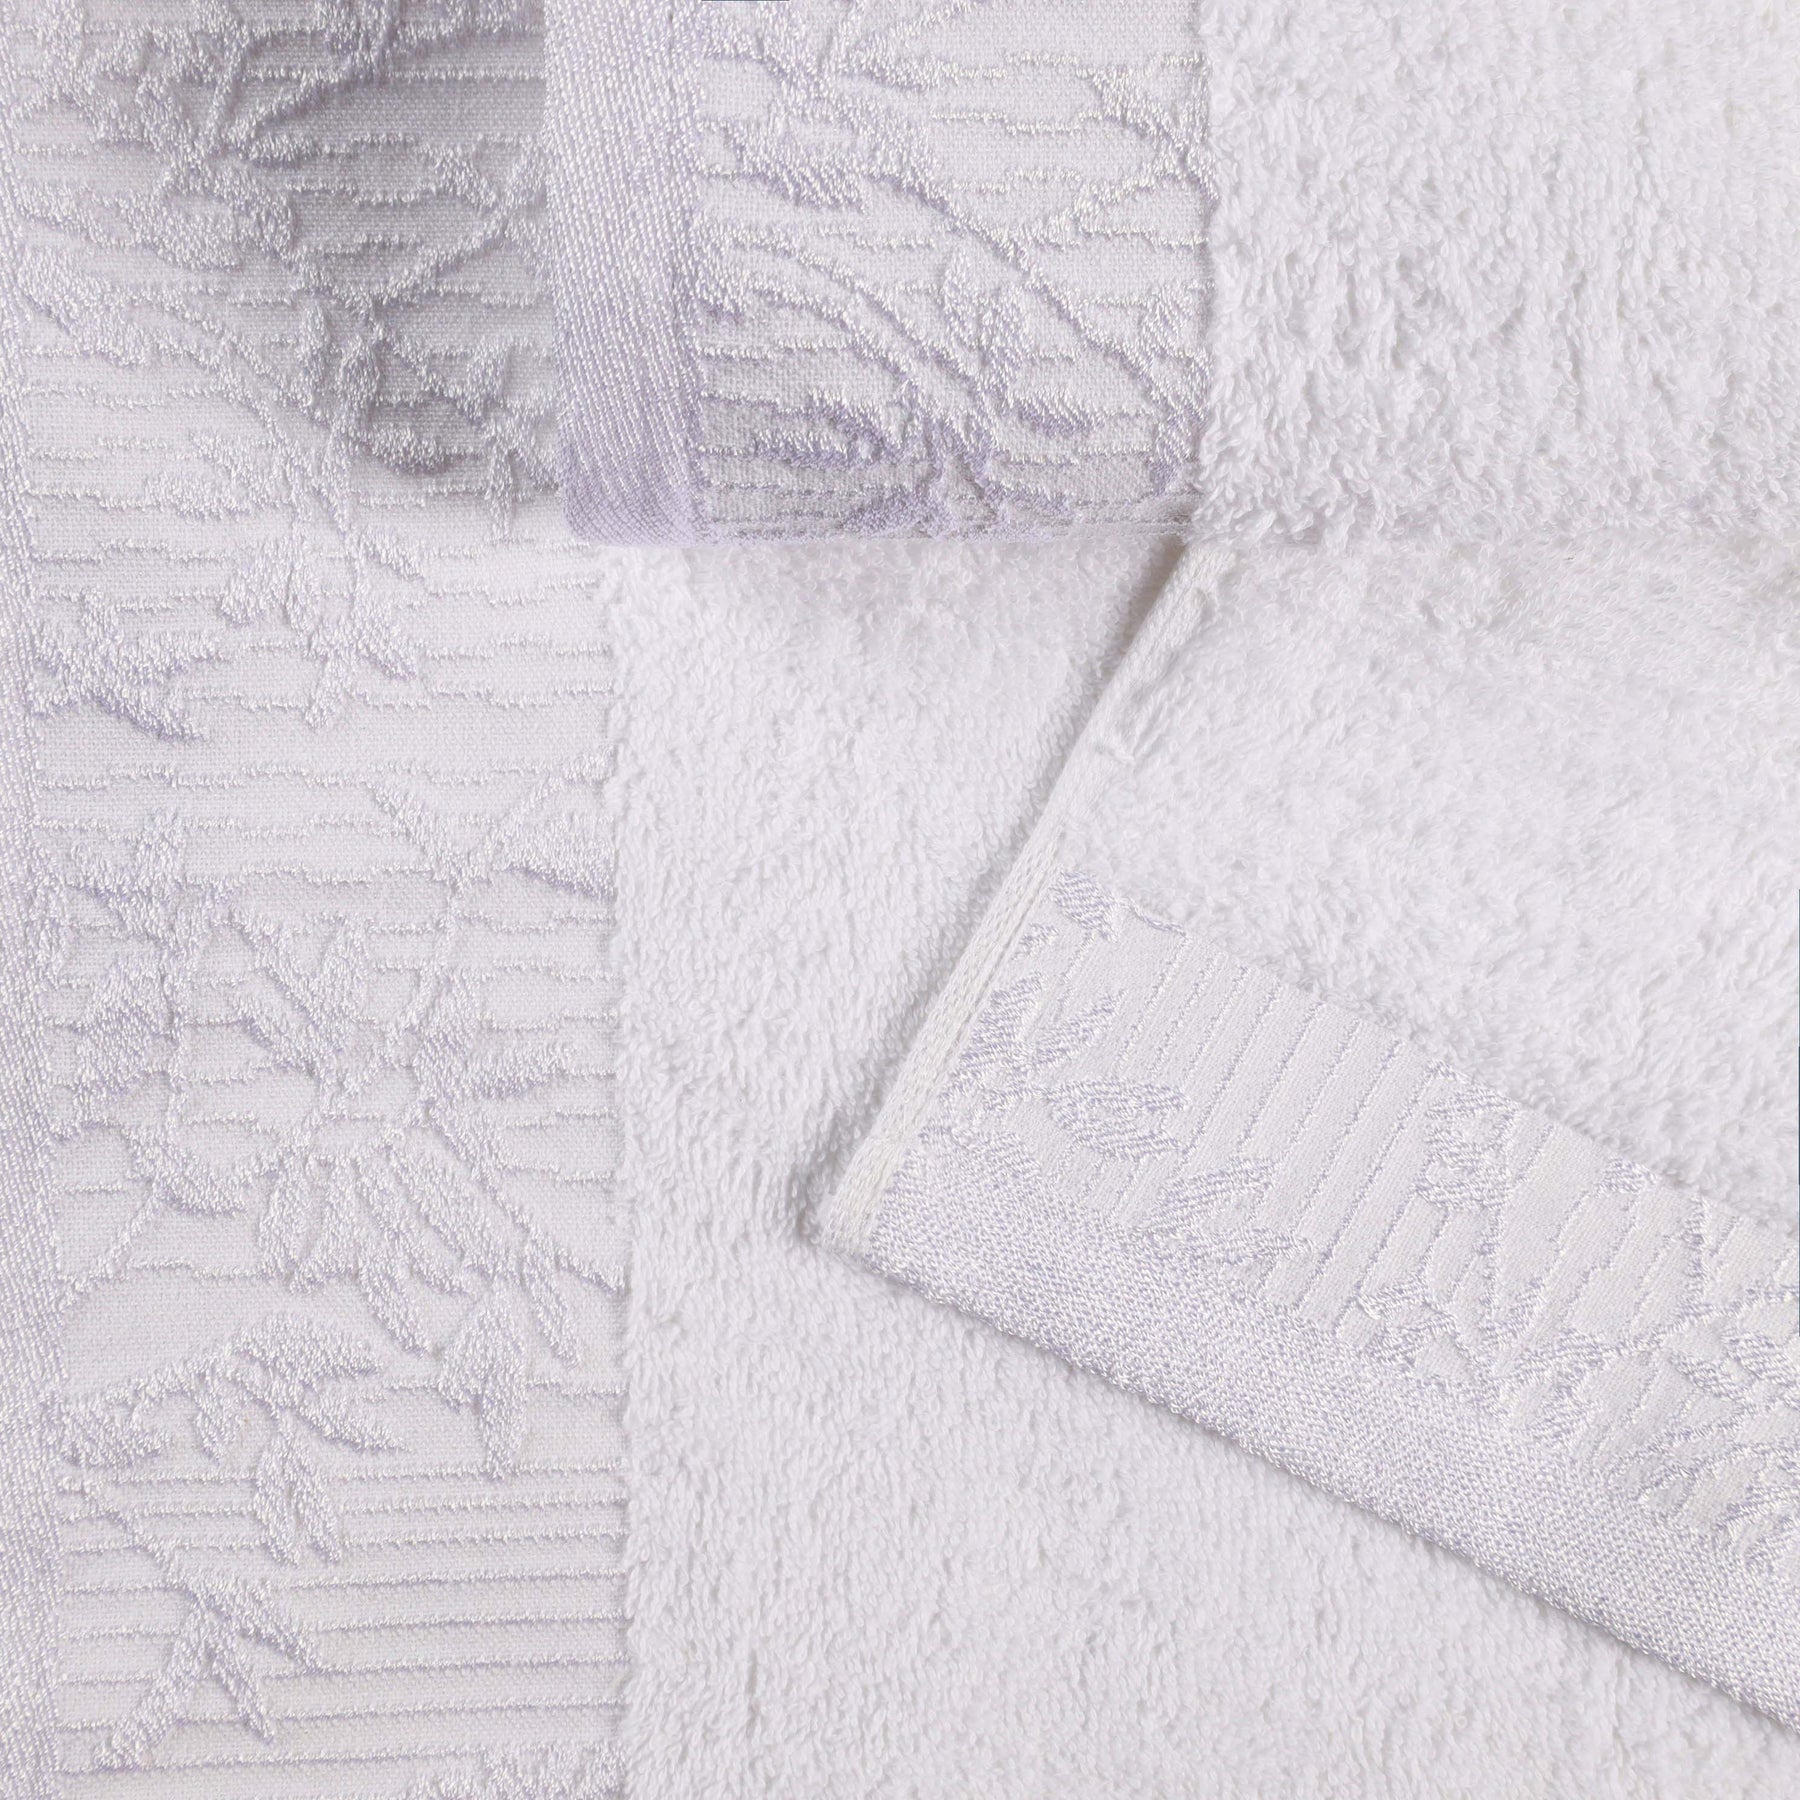 Wisteria Cotton Floral Embroidered Jacquard Border Bath Towel - White